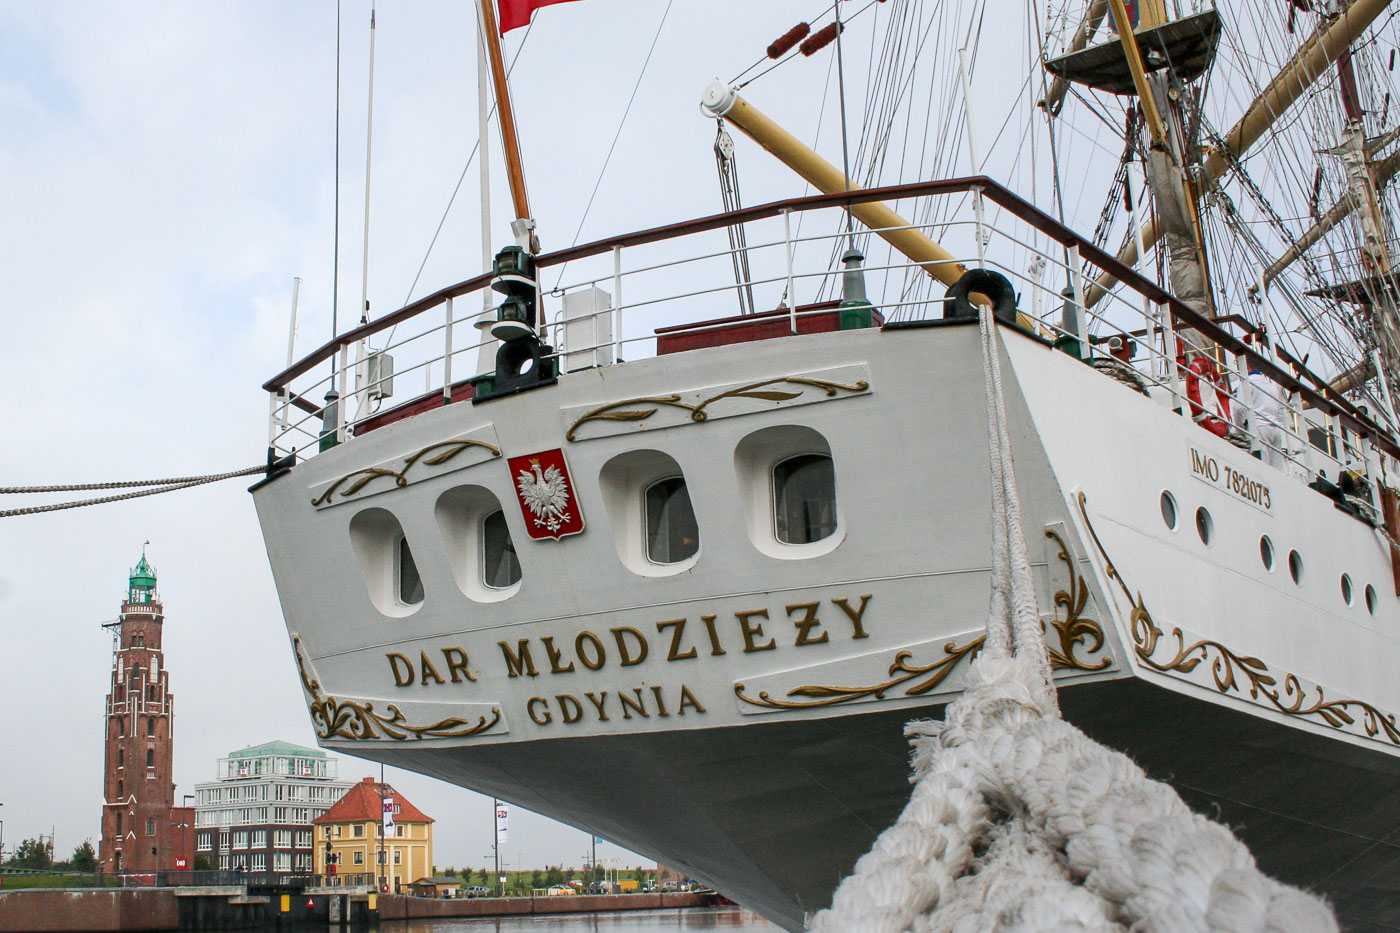 Dar Mlodziezy bei der festwoche 2009 in bremerhaven